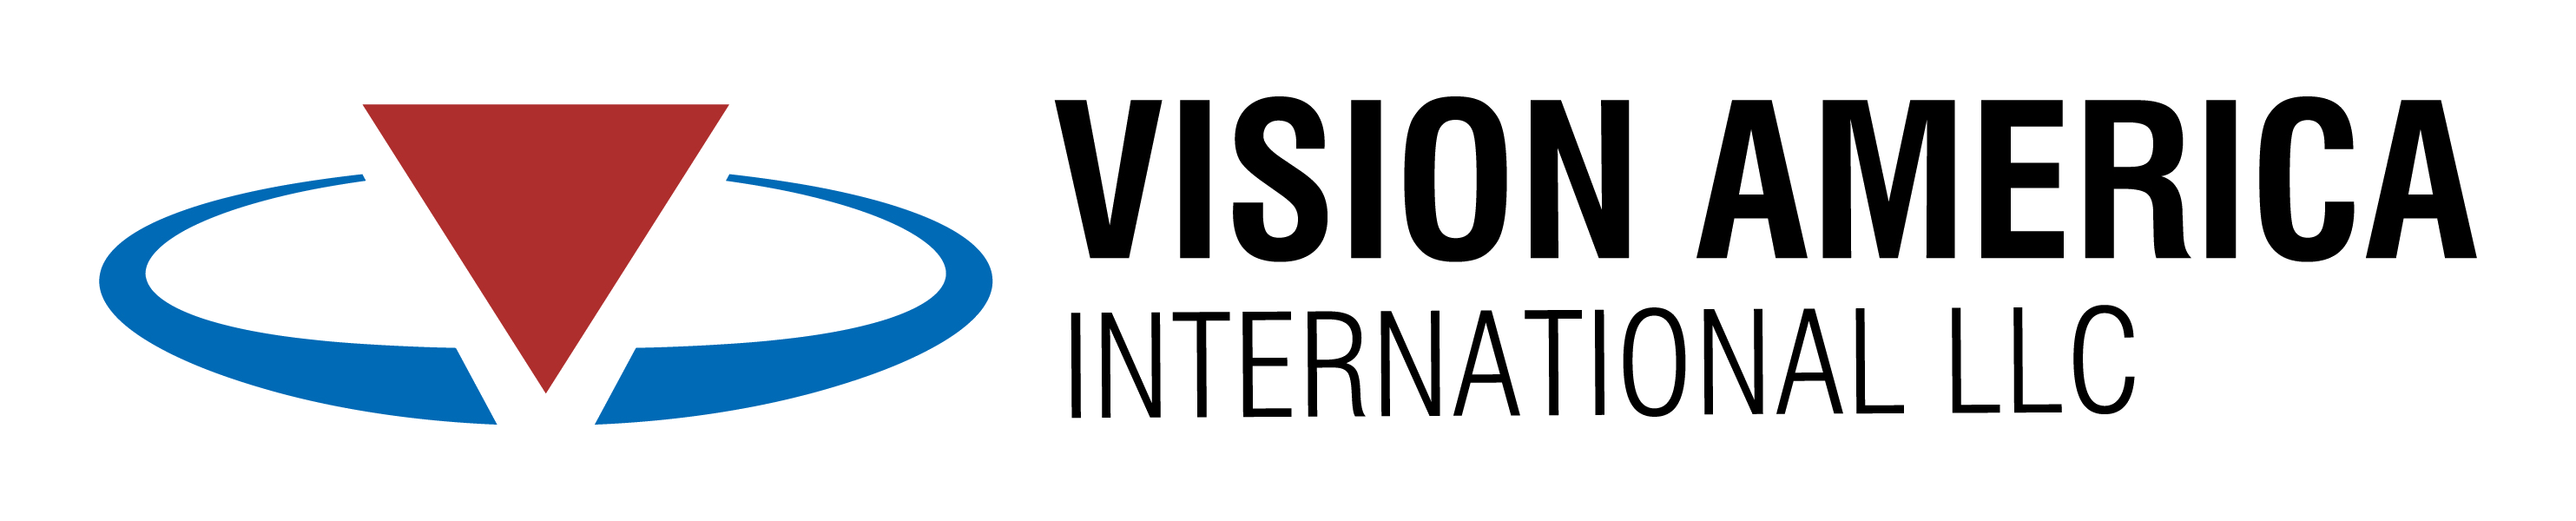 Vision America logo